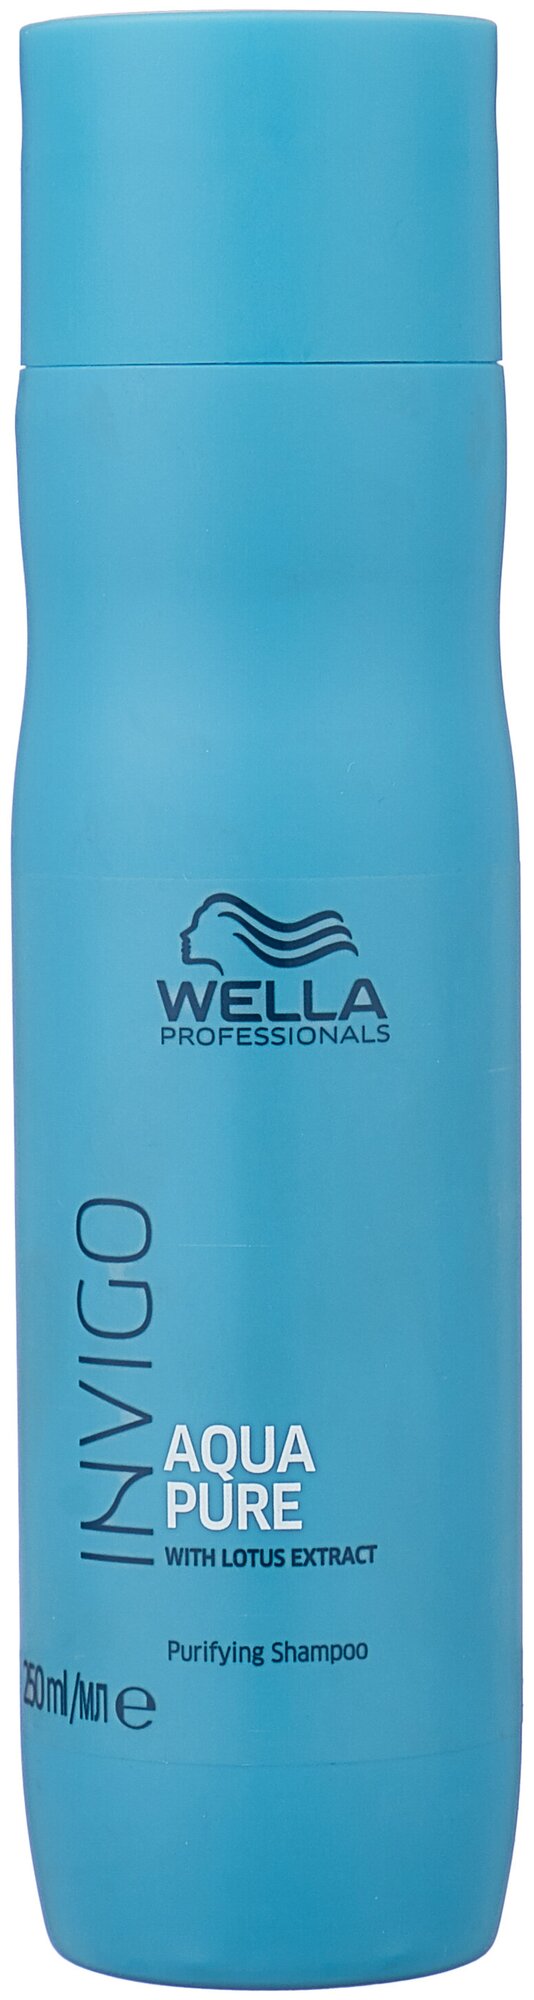 Wella Professionals шампунь Invigo Balance Aqua Pure очищающий, 250 мл